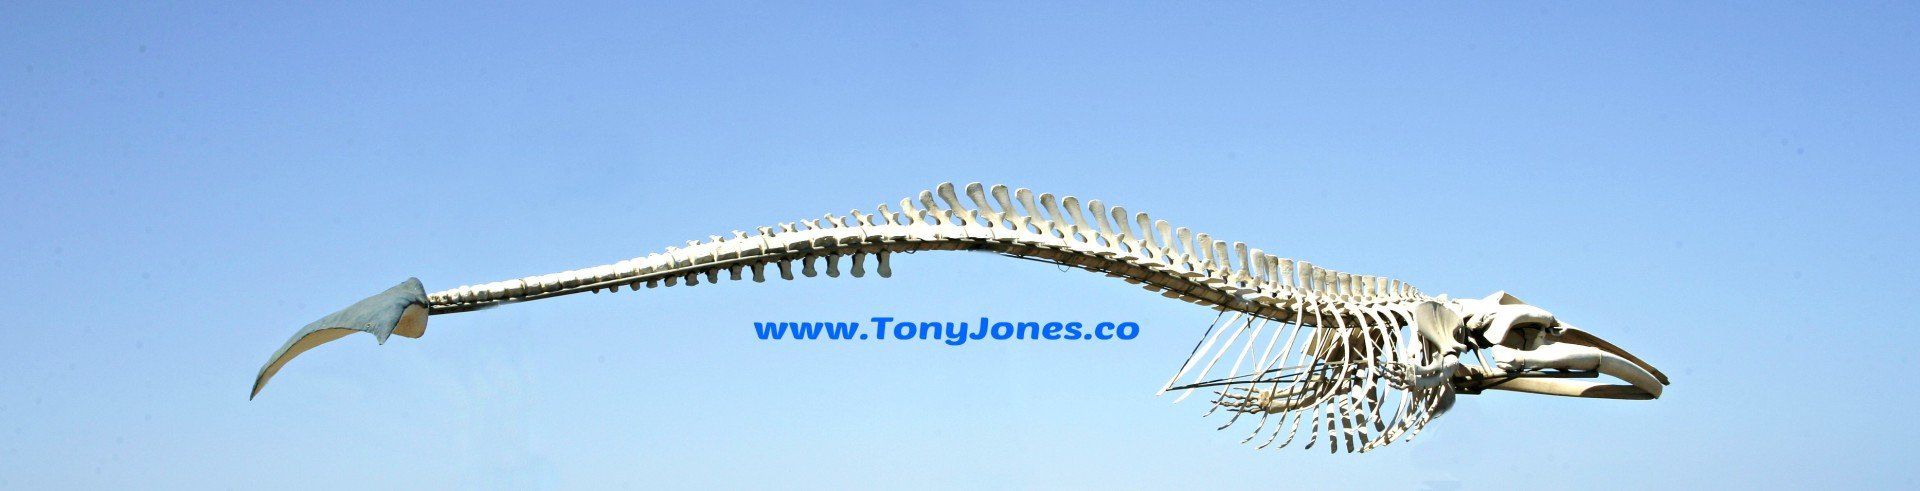 Whale skeleton image - Tony Jones CITP photography for websites